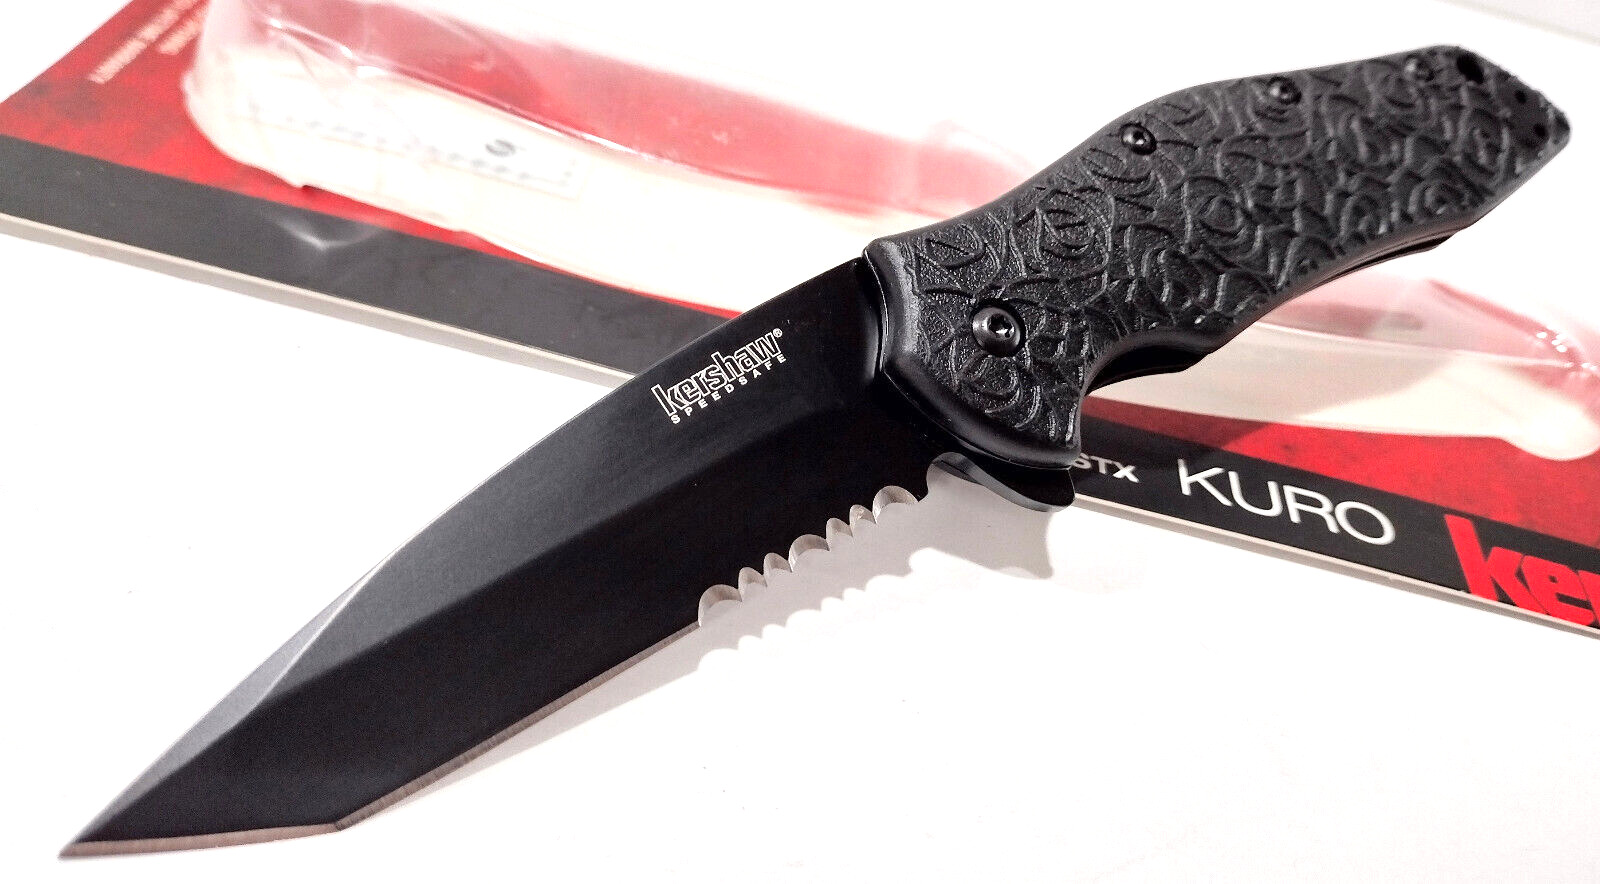 KERSHAW KS1835 KURO Tactical Spring Open Assisted Folding Pocket Knife EDC